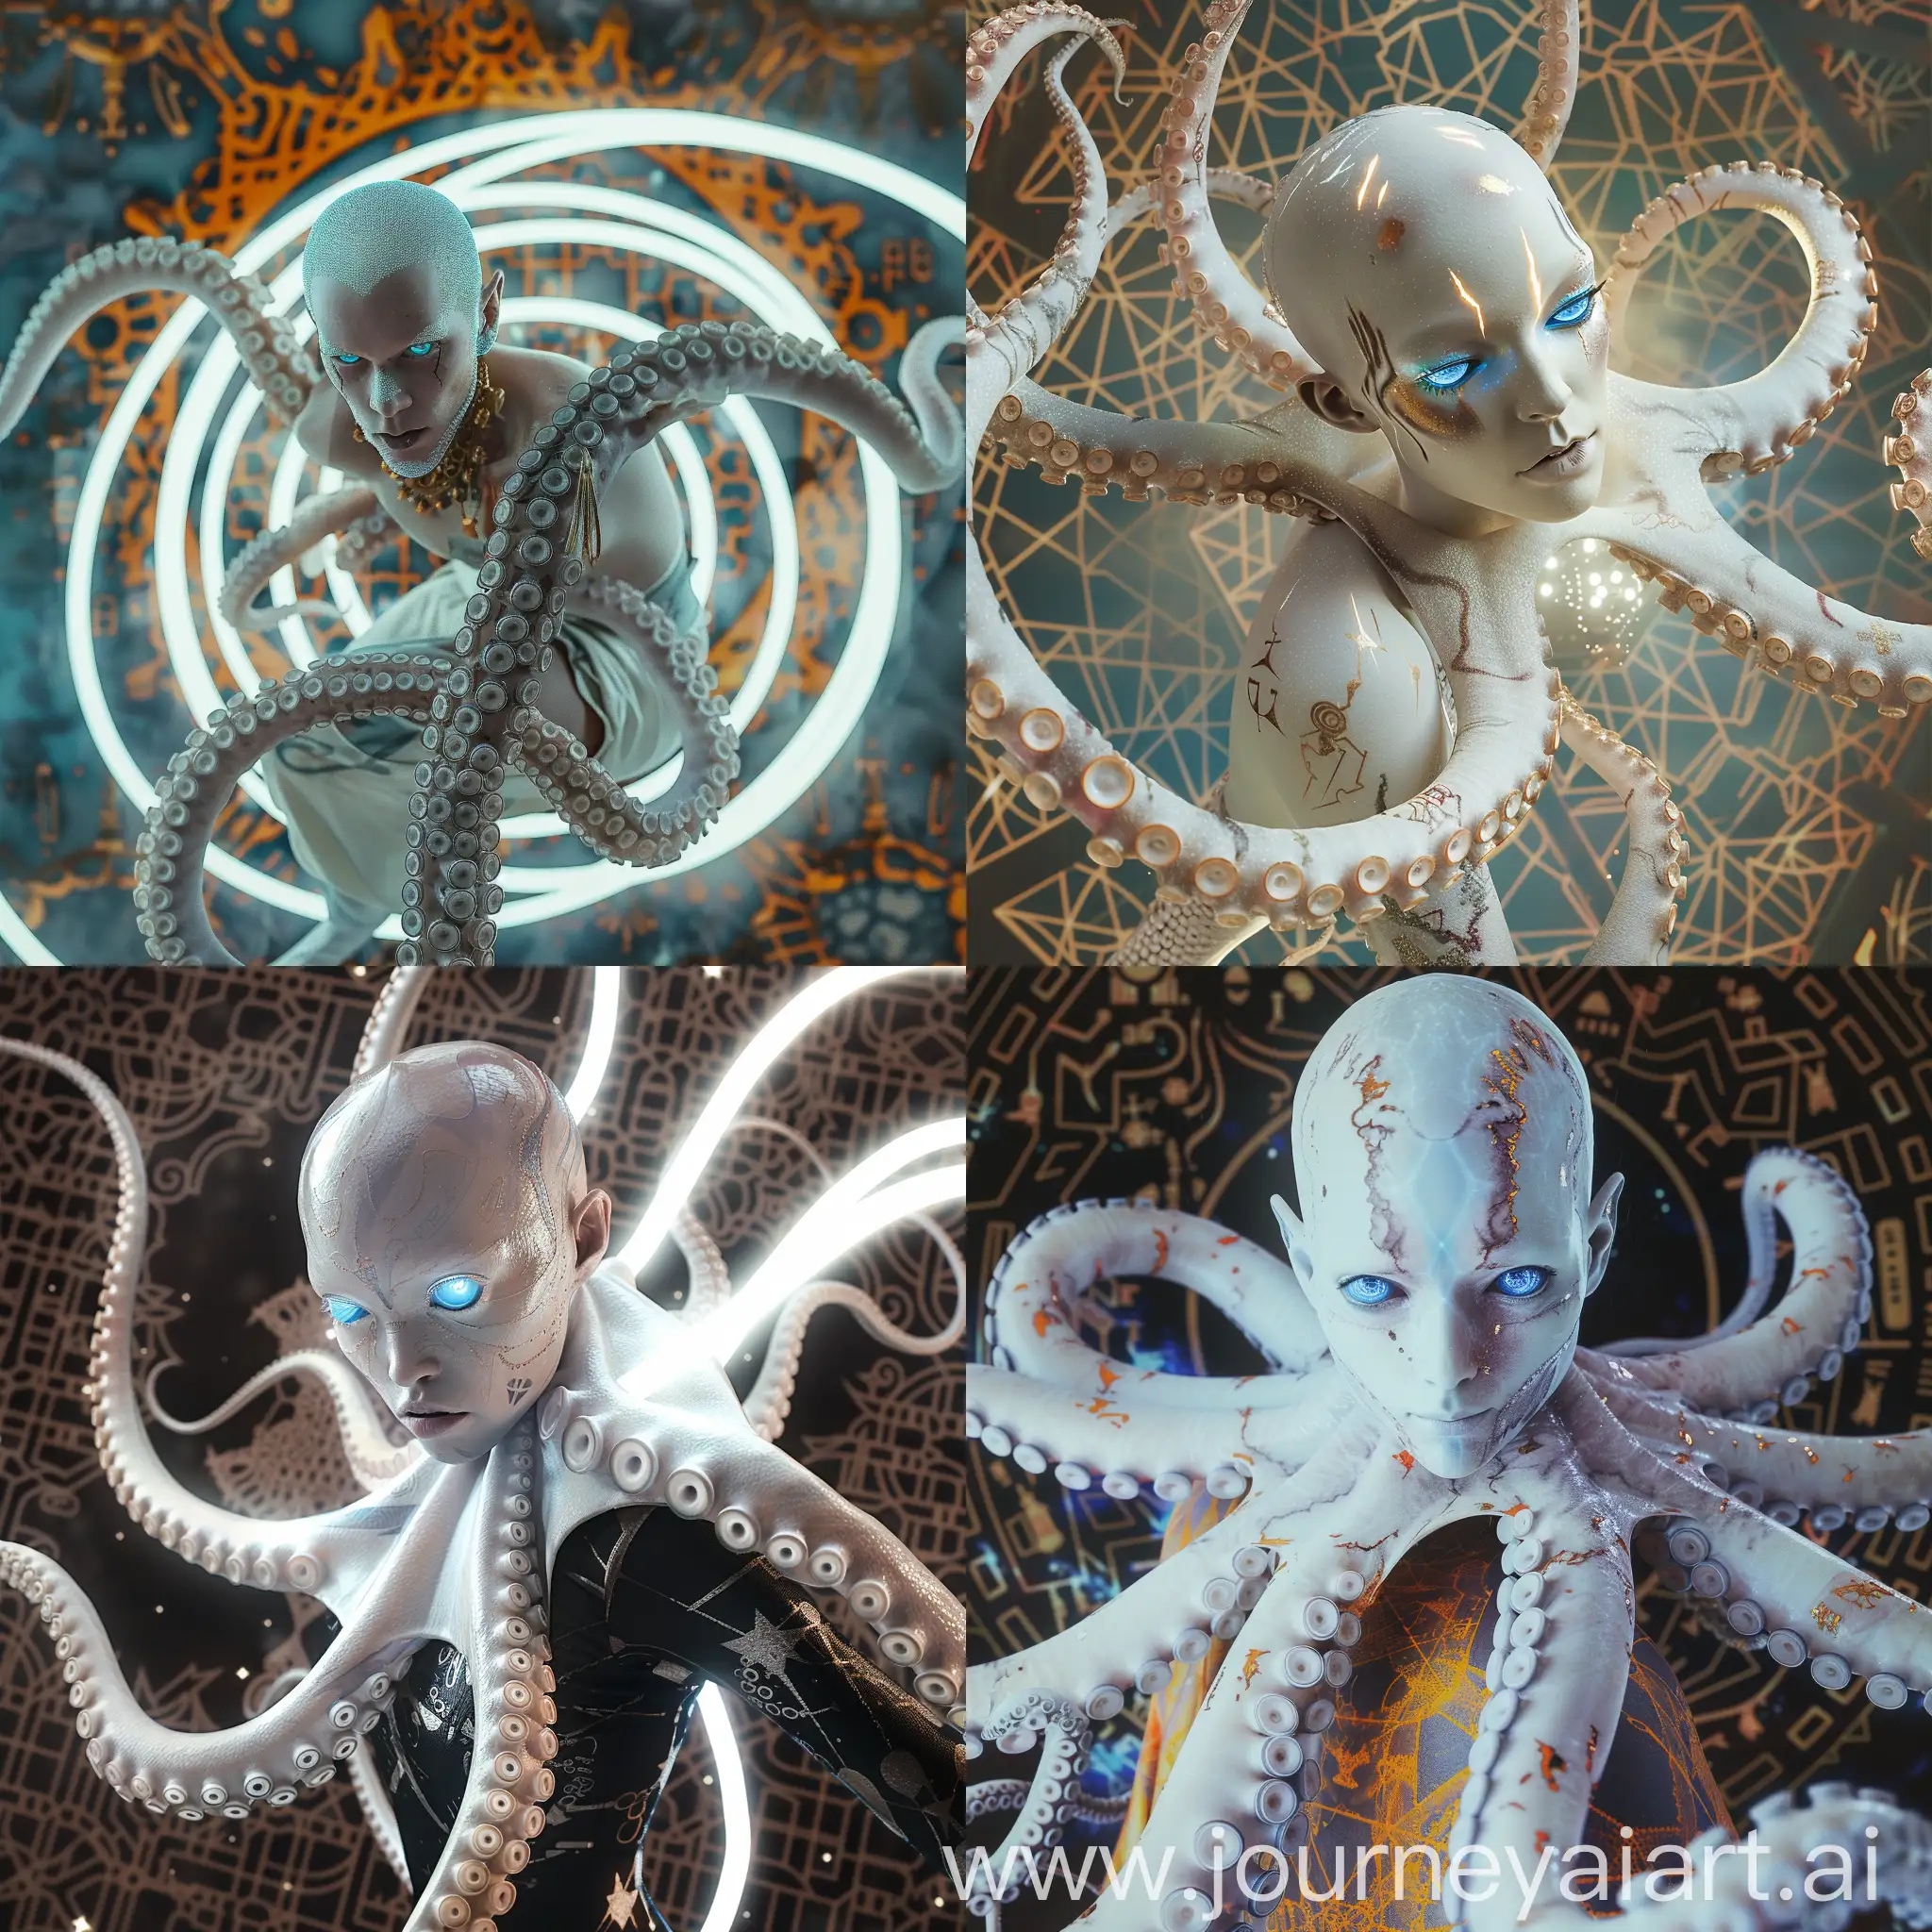 Sleek-Ultra-Realistic-Vogue-Style-Albino-Blue-Eyes-Tribal-MonkOctopus-Hybrid-Floating-in-Mysterious-Energy-Light